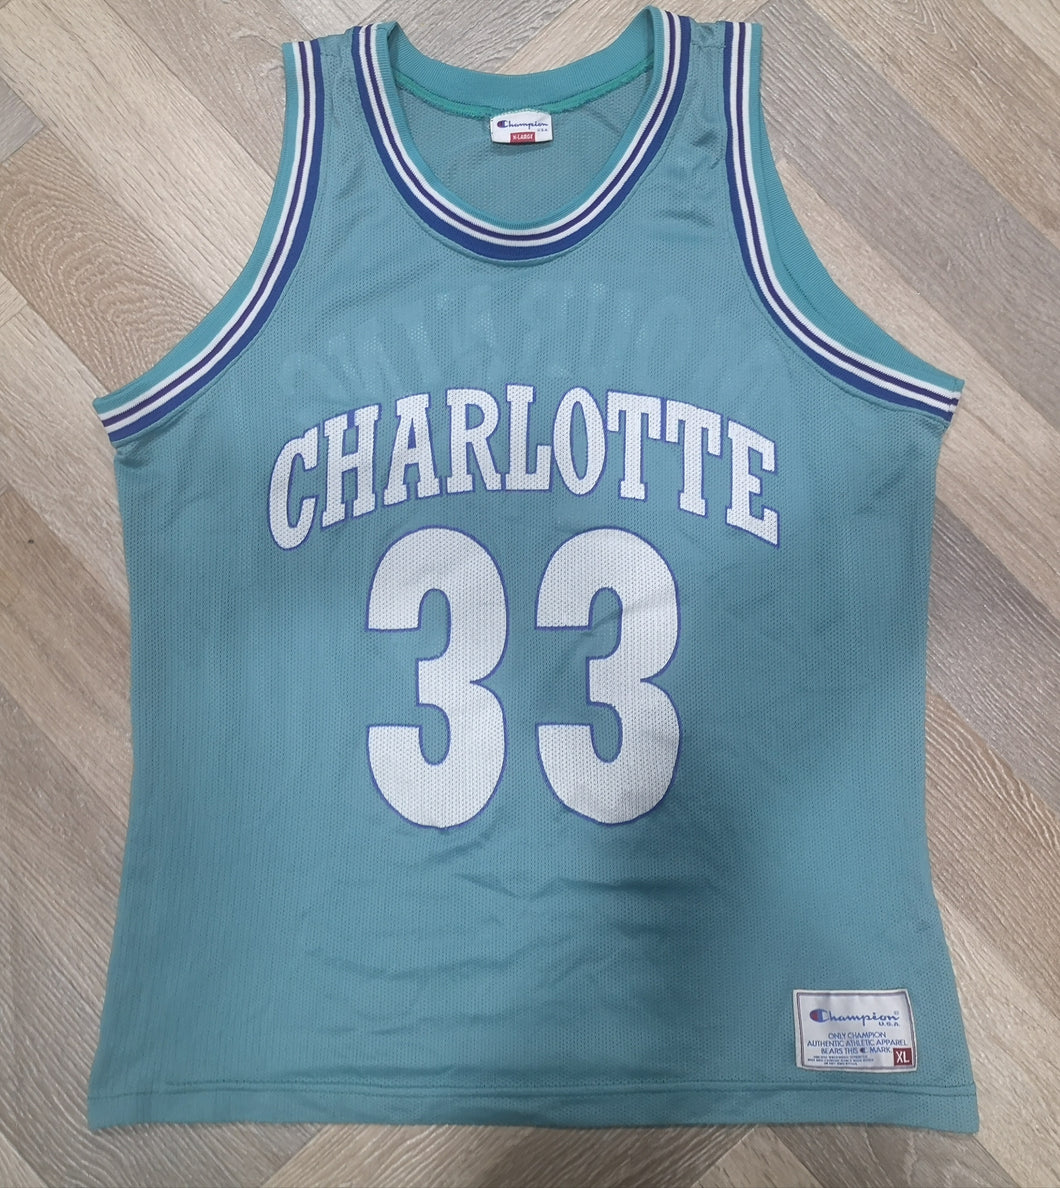 Jersey Alonzo Mourning #33 Charlotte Hornets NBA Vintage